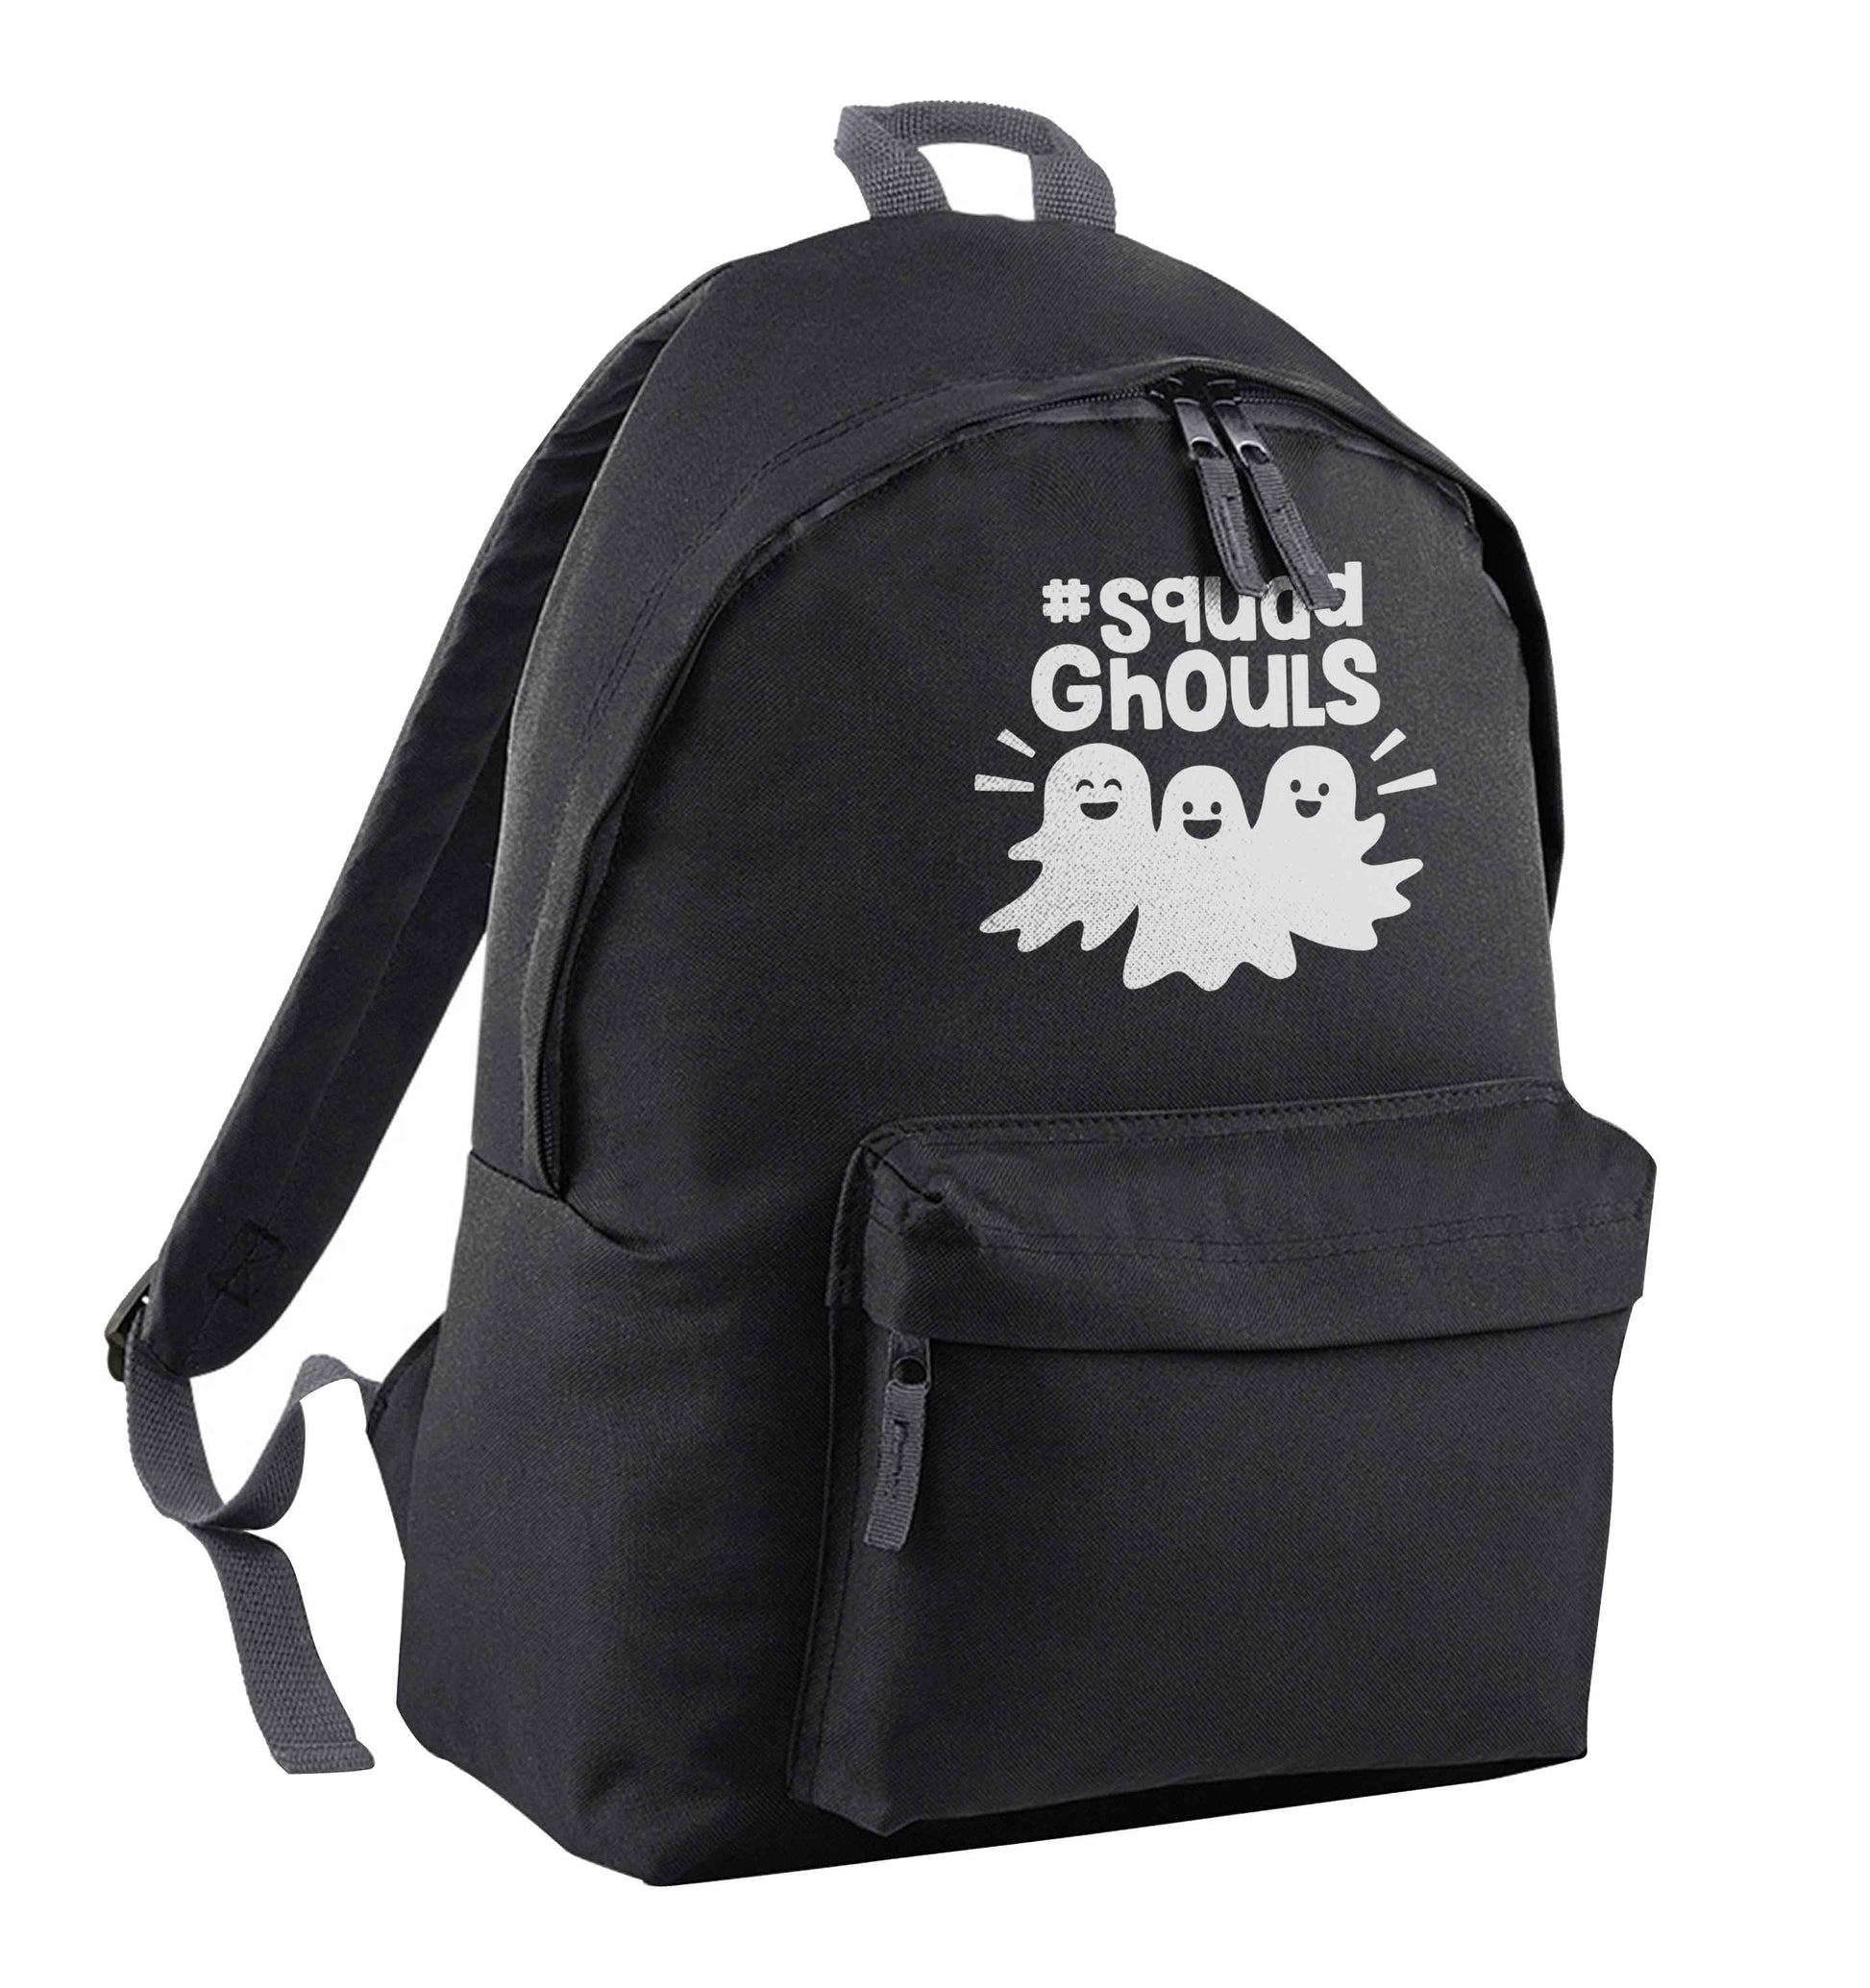 Squad ghouls Kit black children's backpack